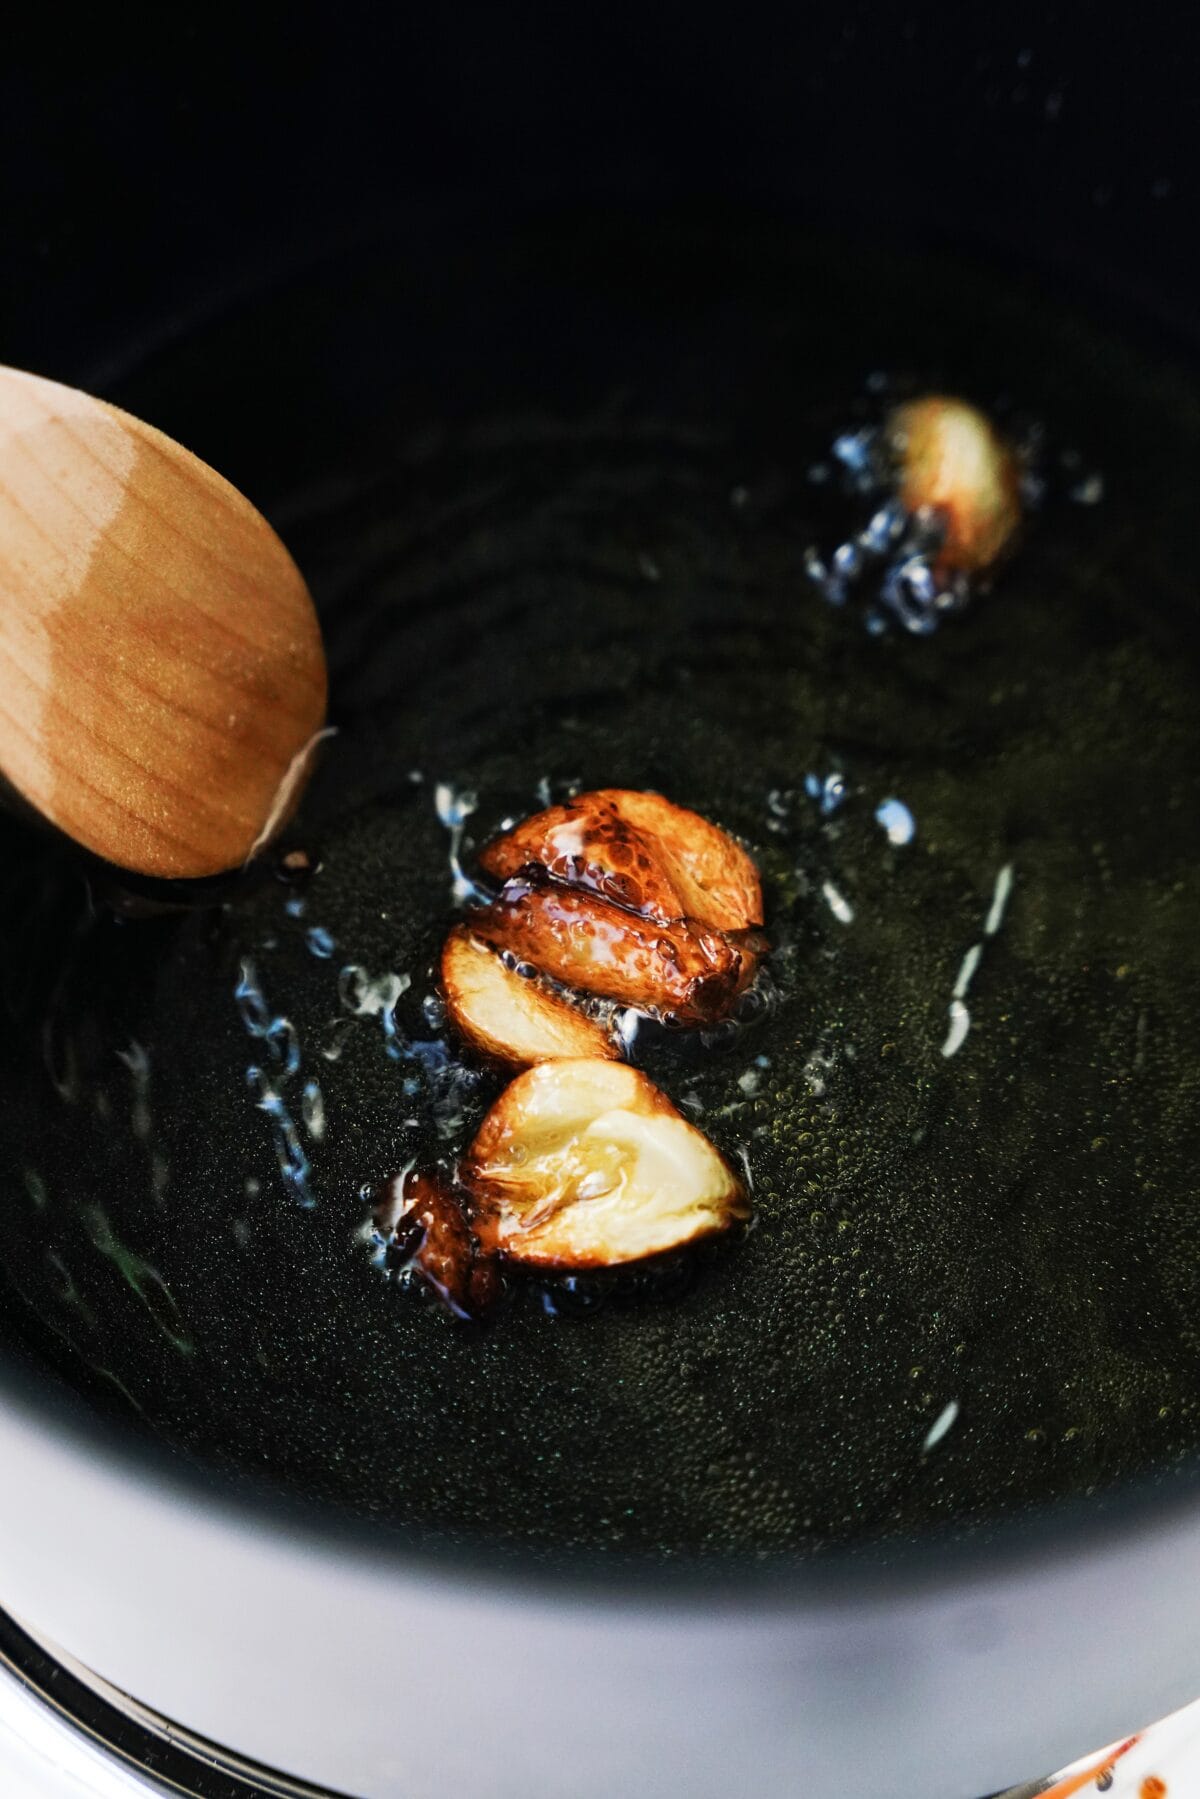 crushed garlic cooking in oil in saucepan